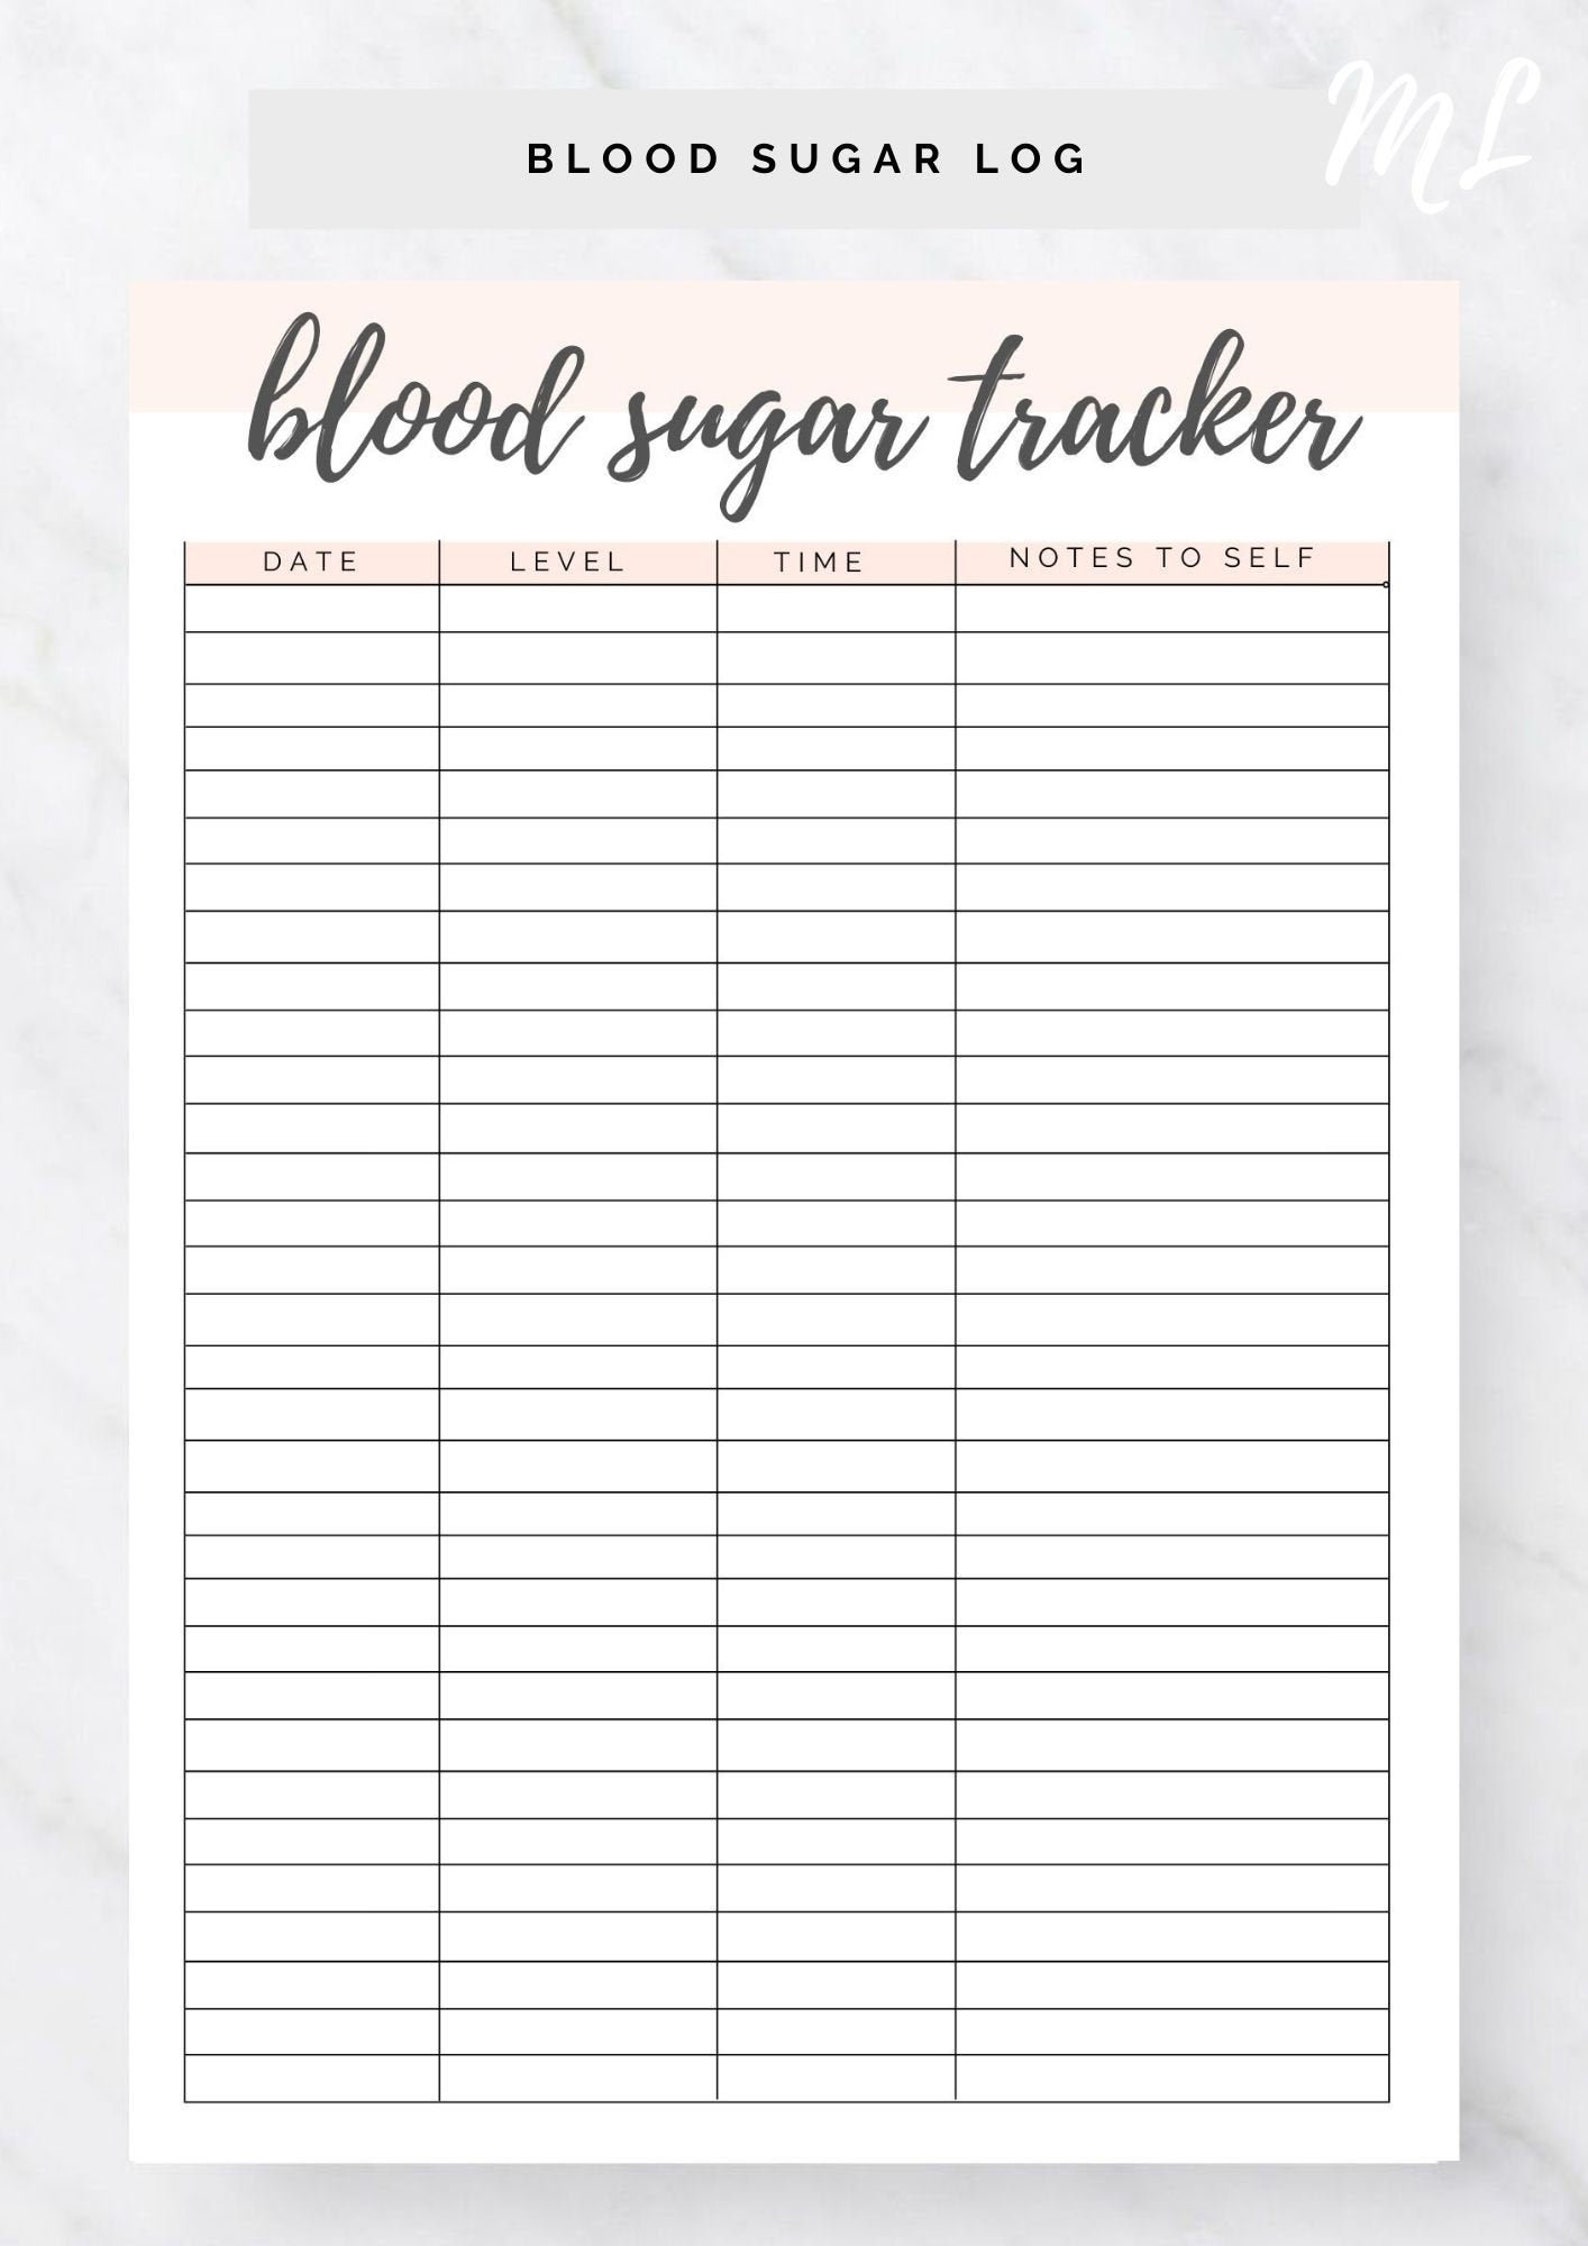 blood-sugar-log-printable-blood-sugar-reading-tracker-blood-glucose